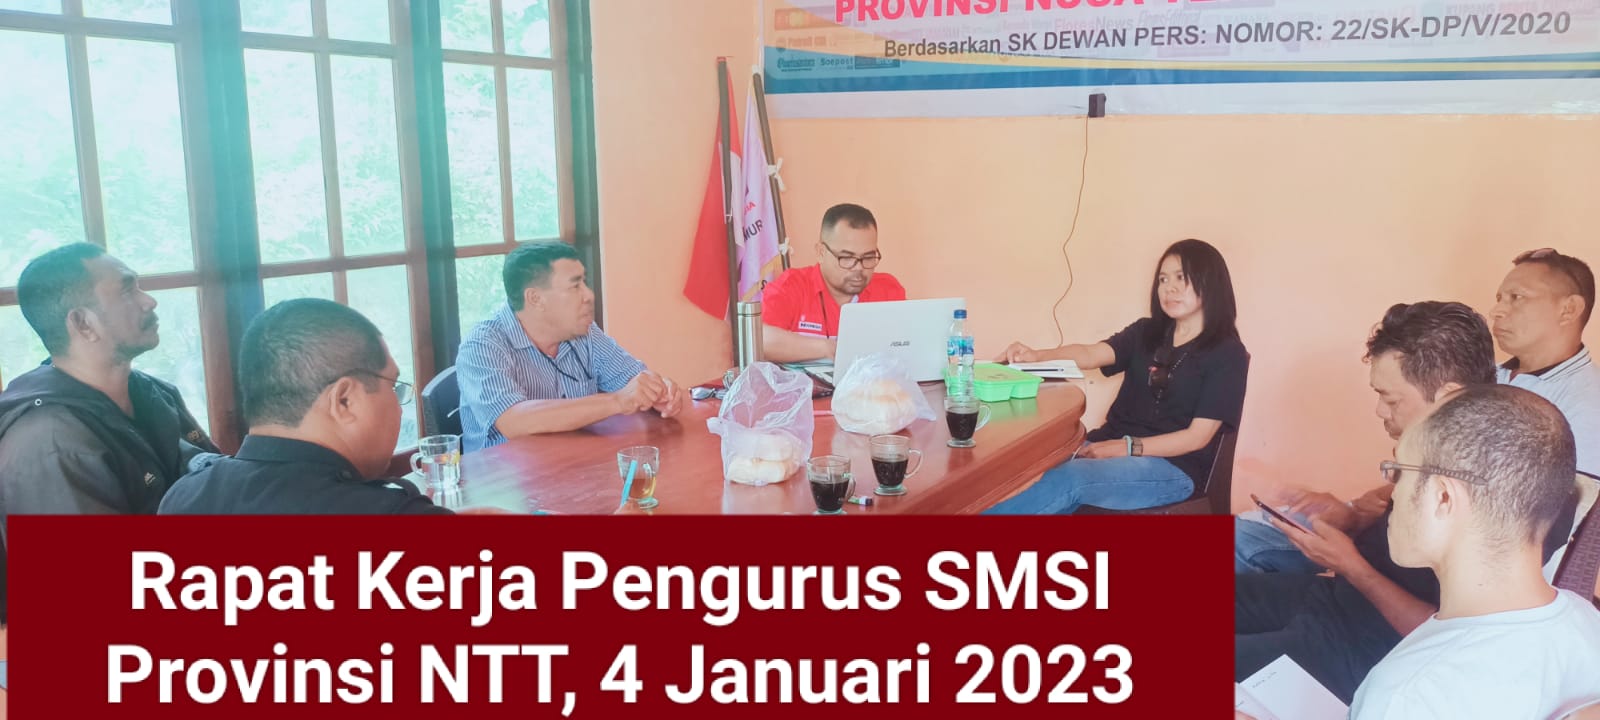  Serikat Media Siber Indonesia NTT  Soroti Legalitas Media Dalam Menjalin Kemitraan 